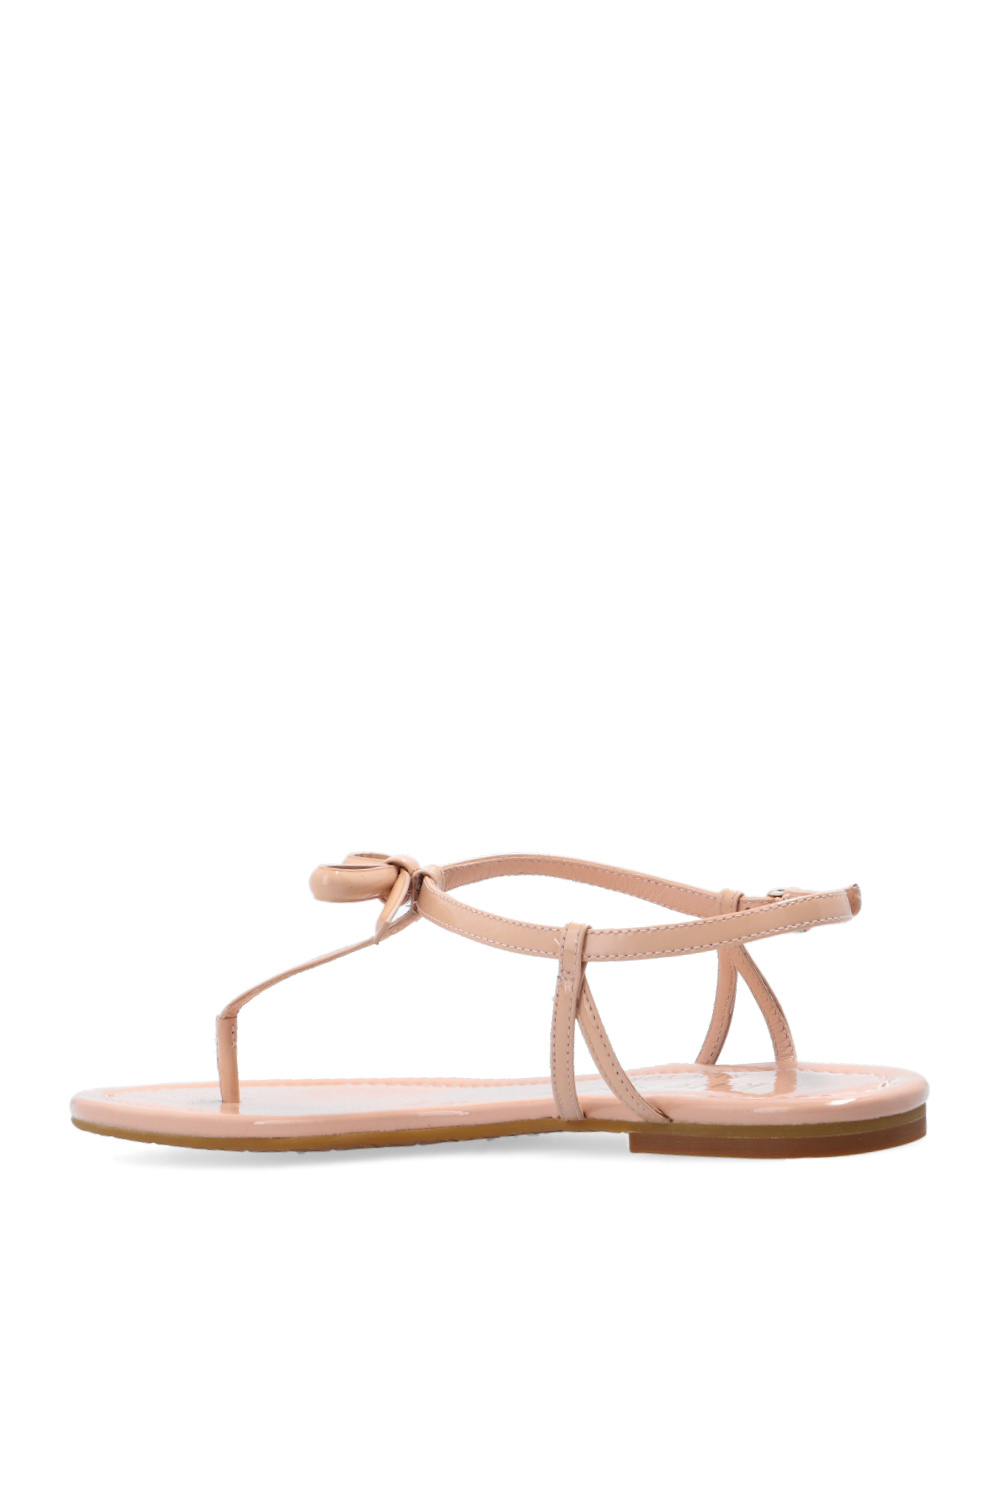 Kate Spade ‘Piazza’ sandals